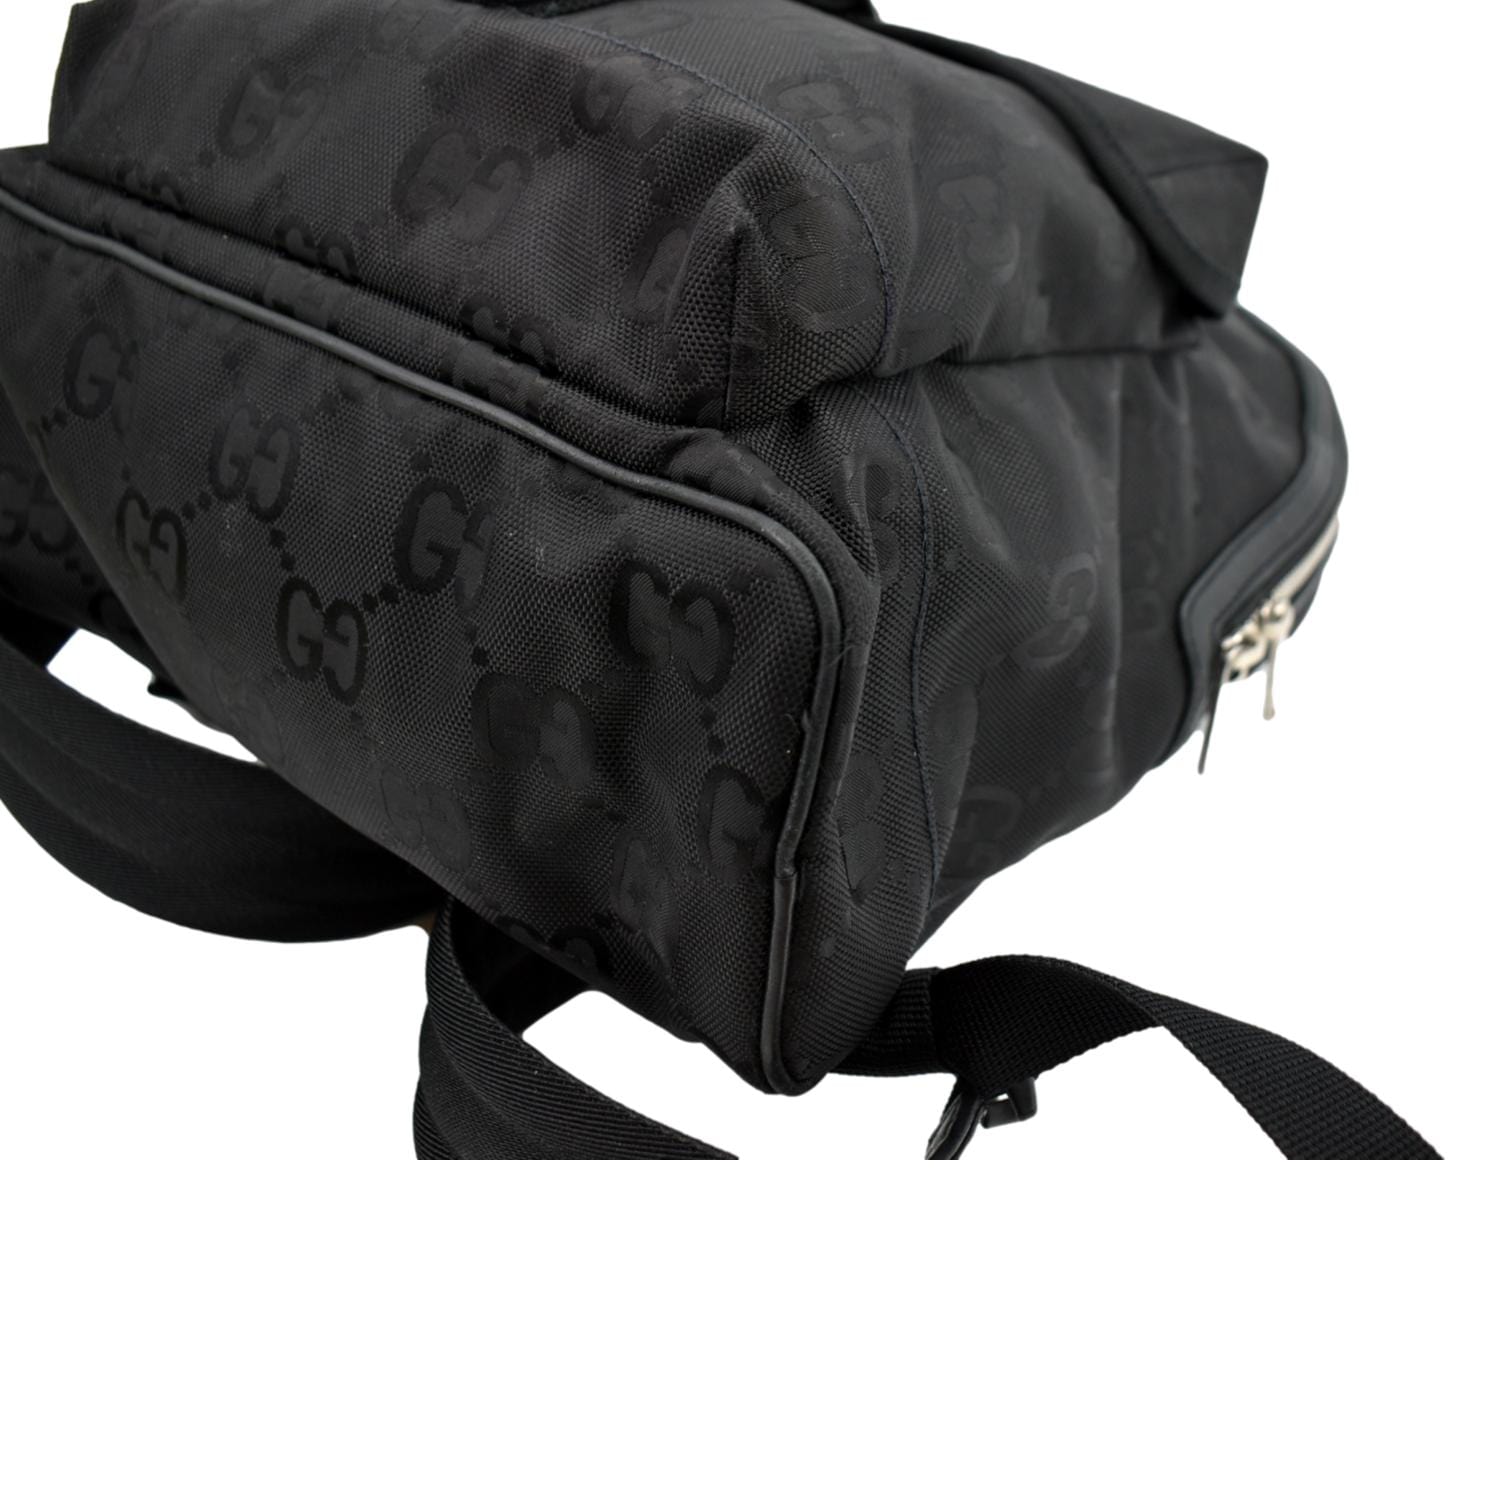 Gucci GG Nylon Rucksack Backpack-Black (Backpacks)